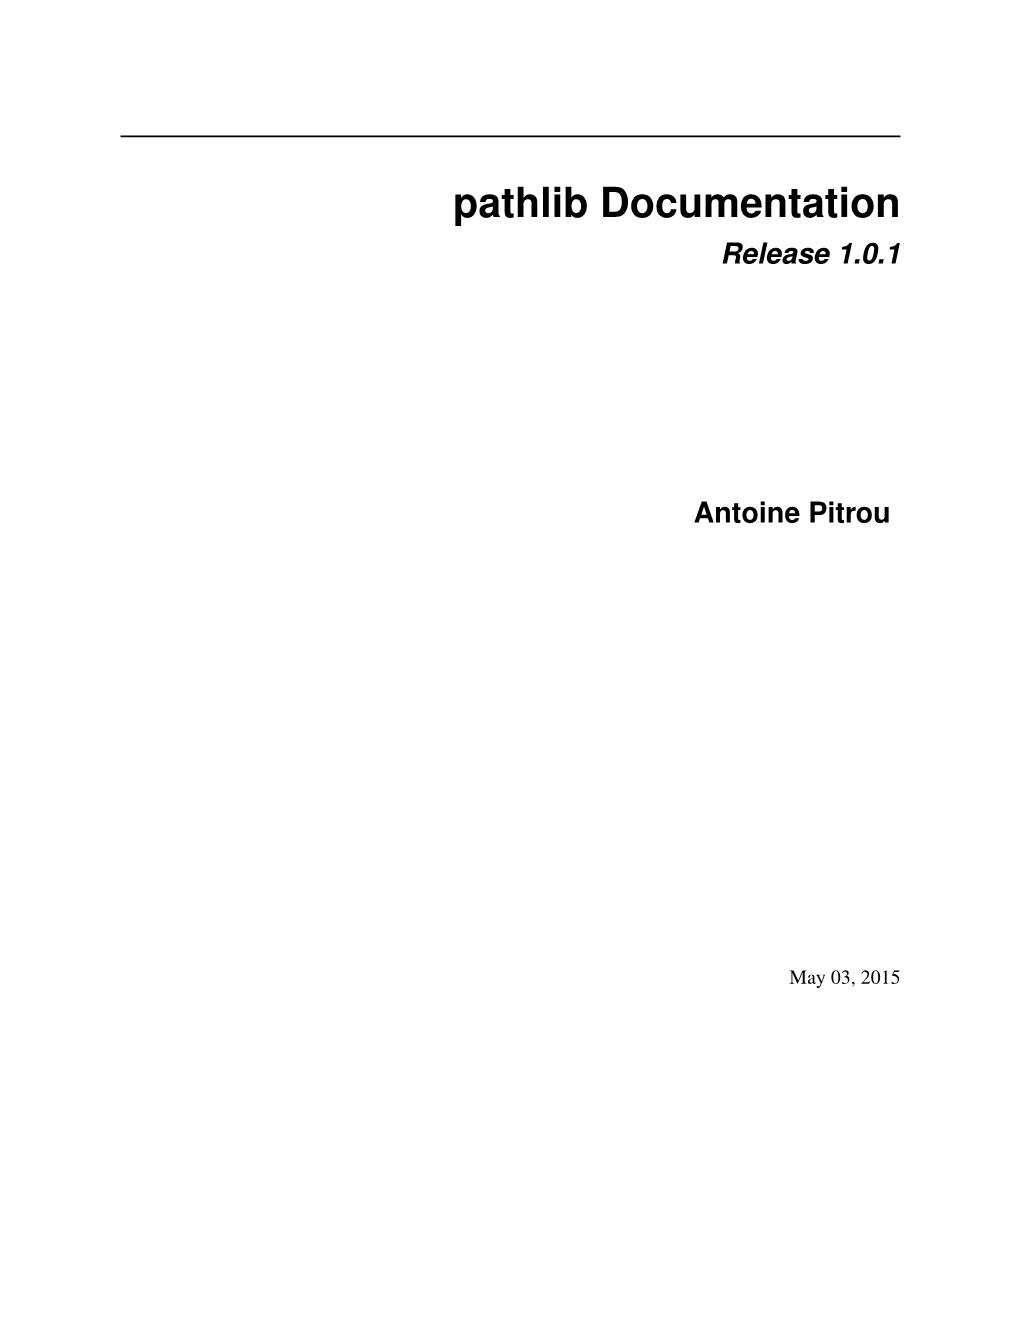 Pathlib Documentation Release 1.0.1